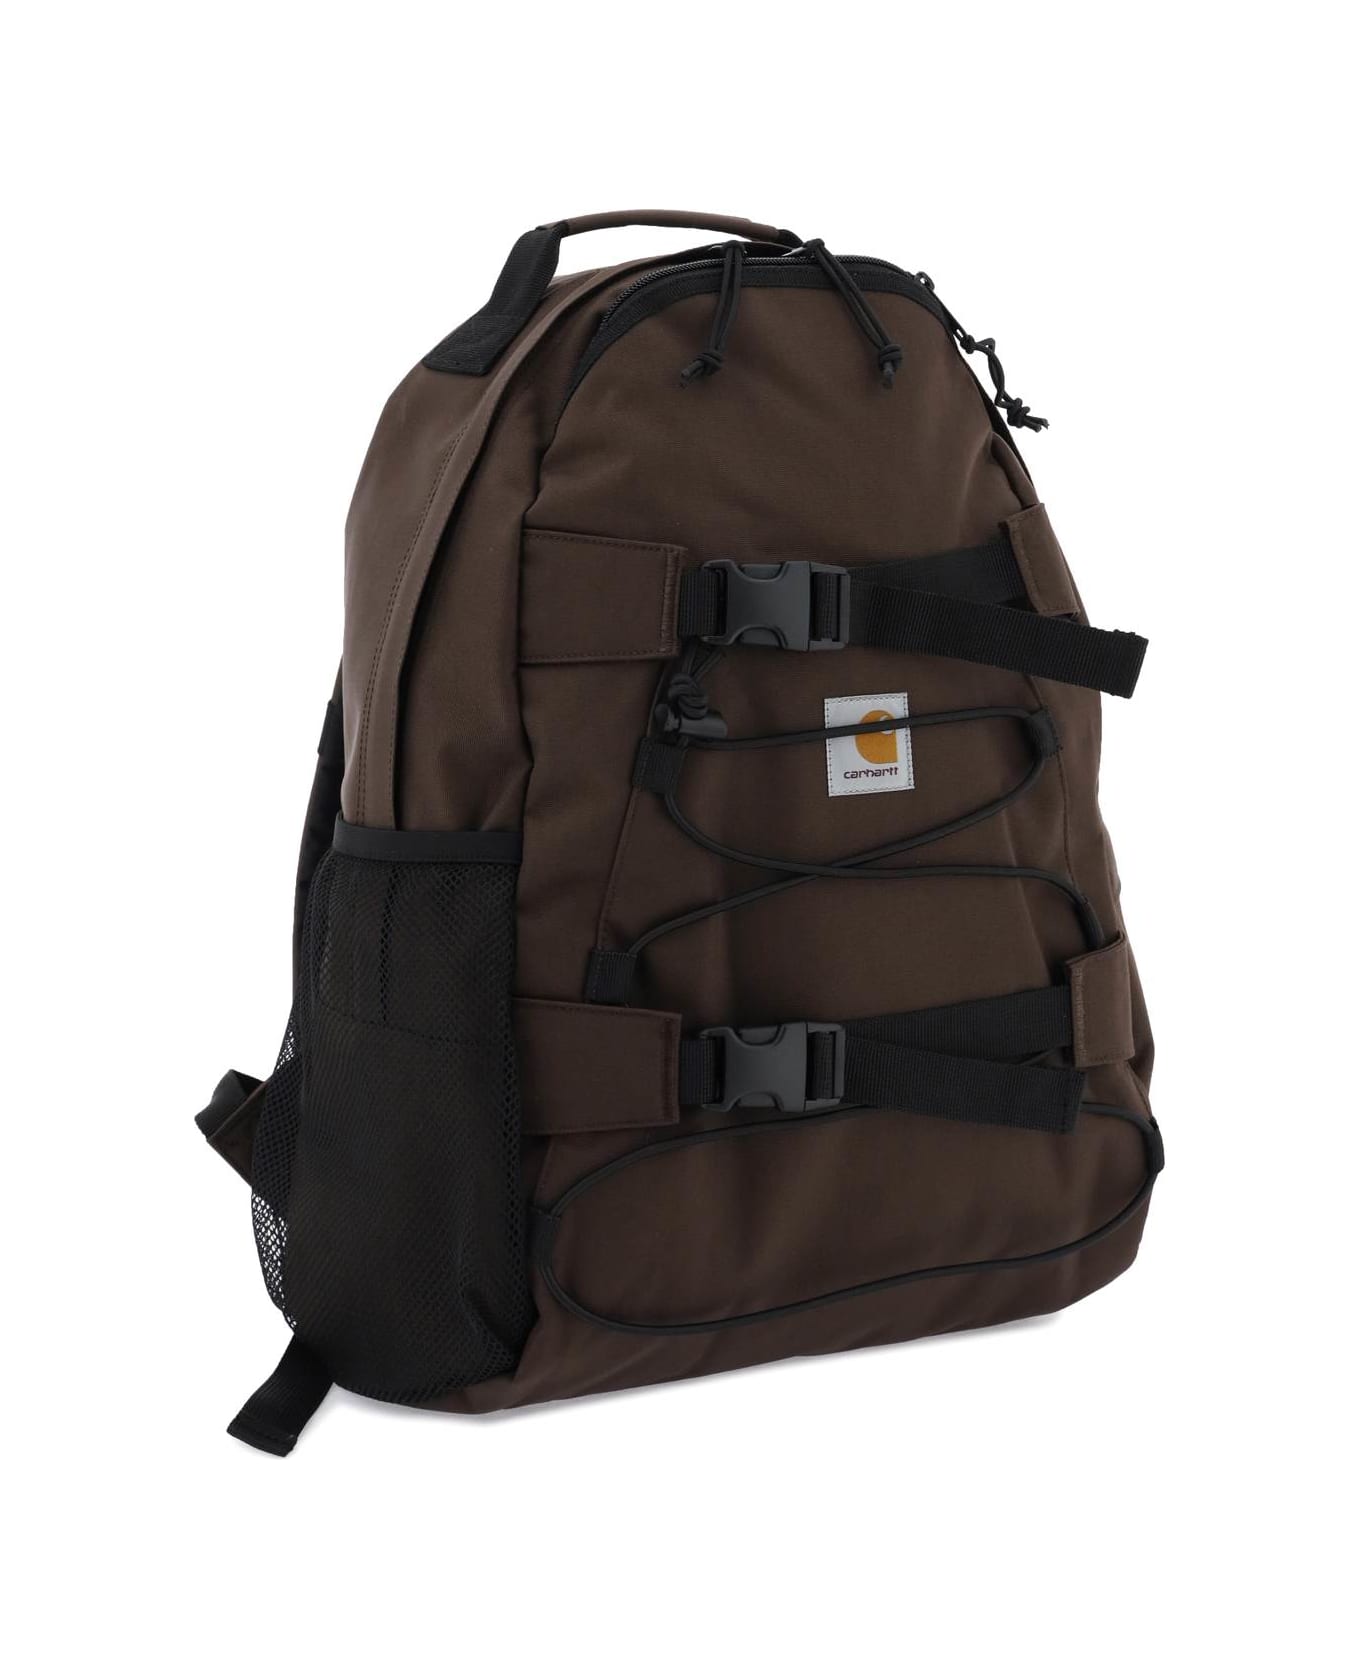 Carhartt Brown Nylon 'kickflip' Backpack - TOBACCO (Brown)